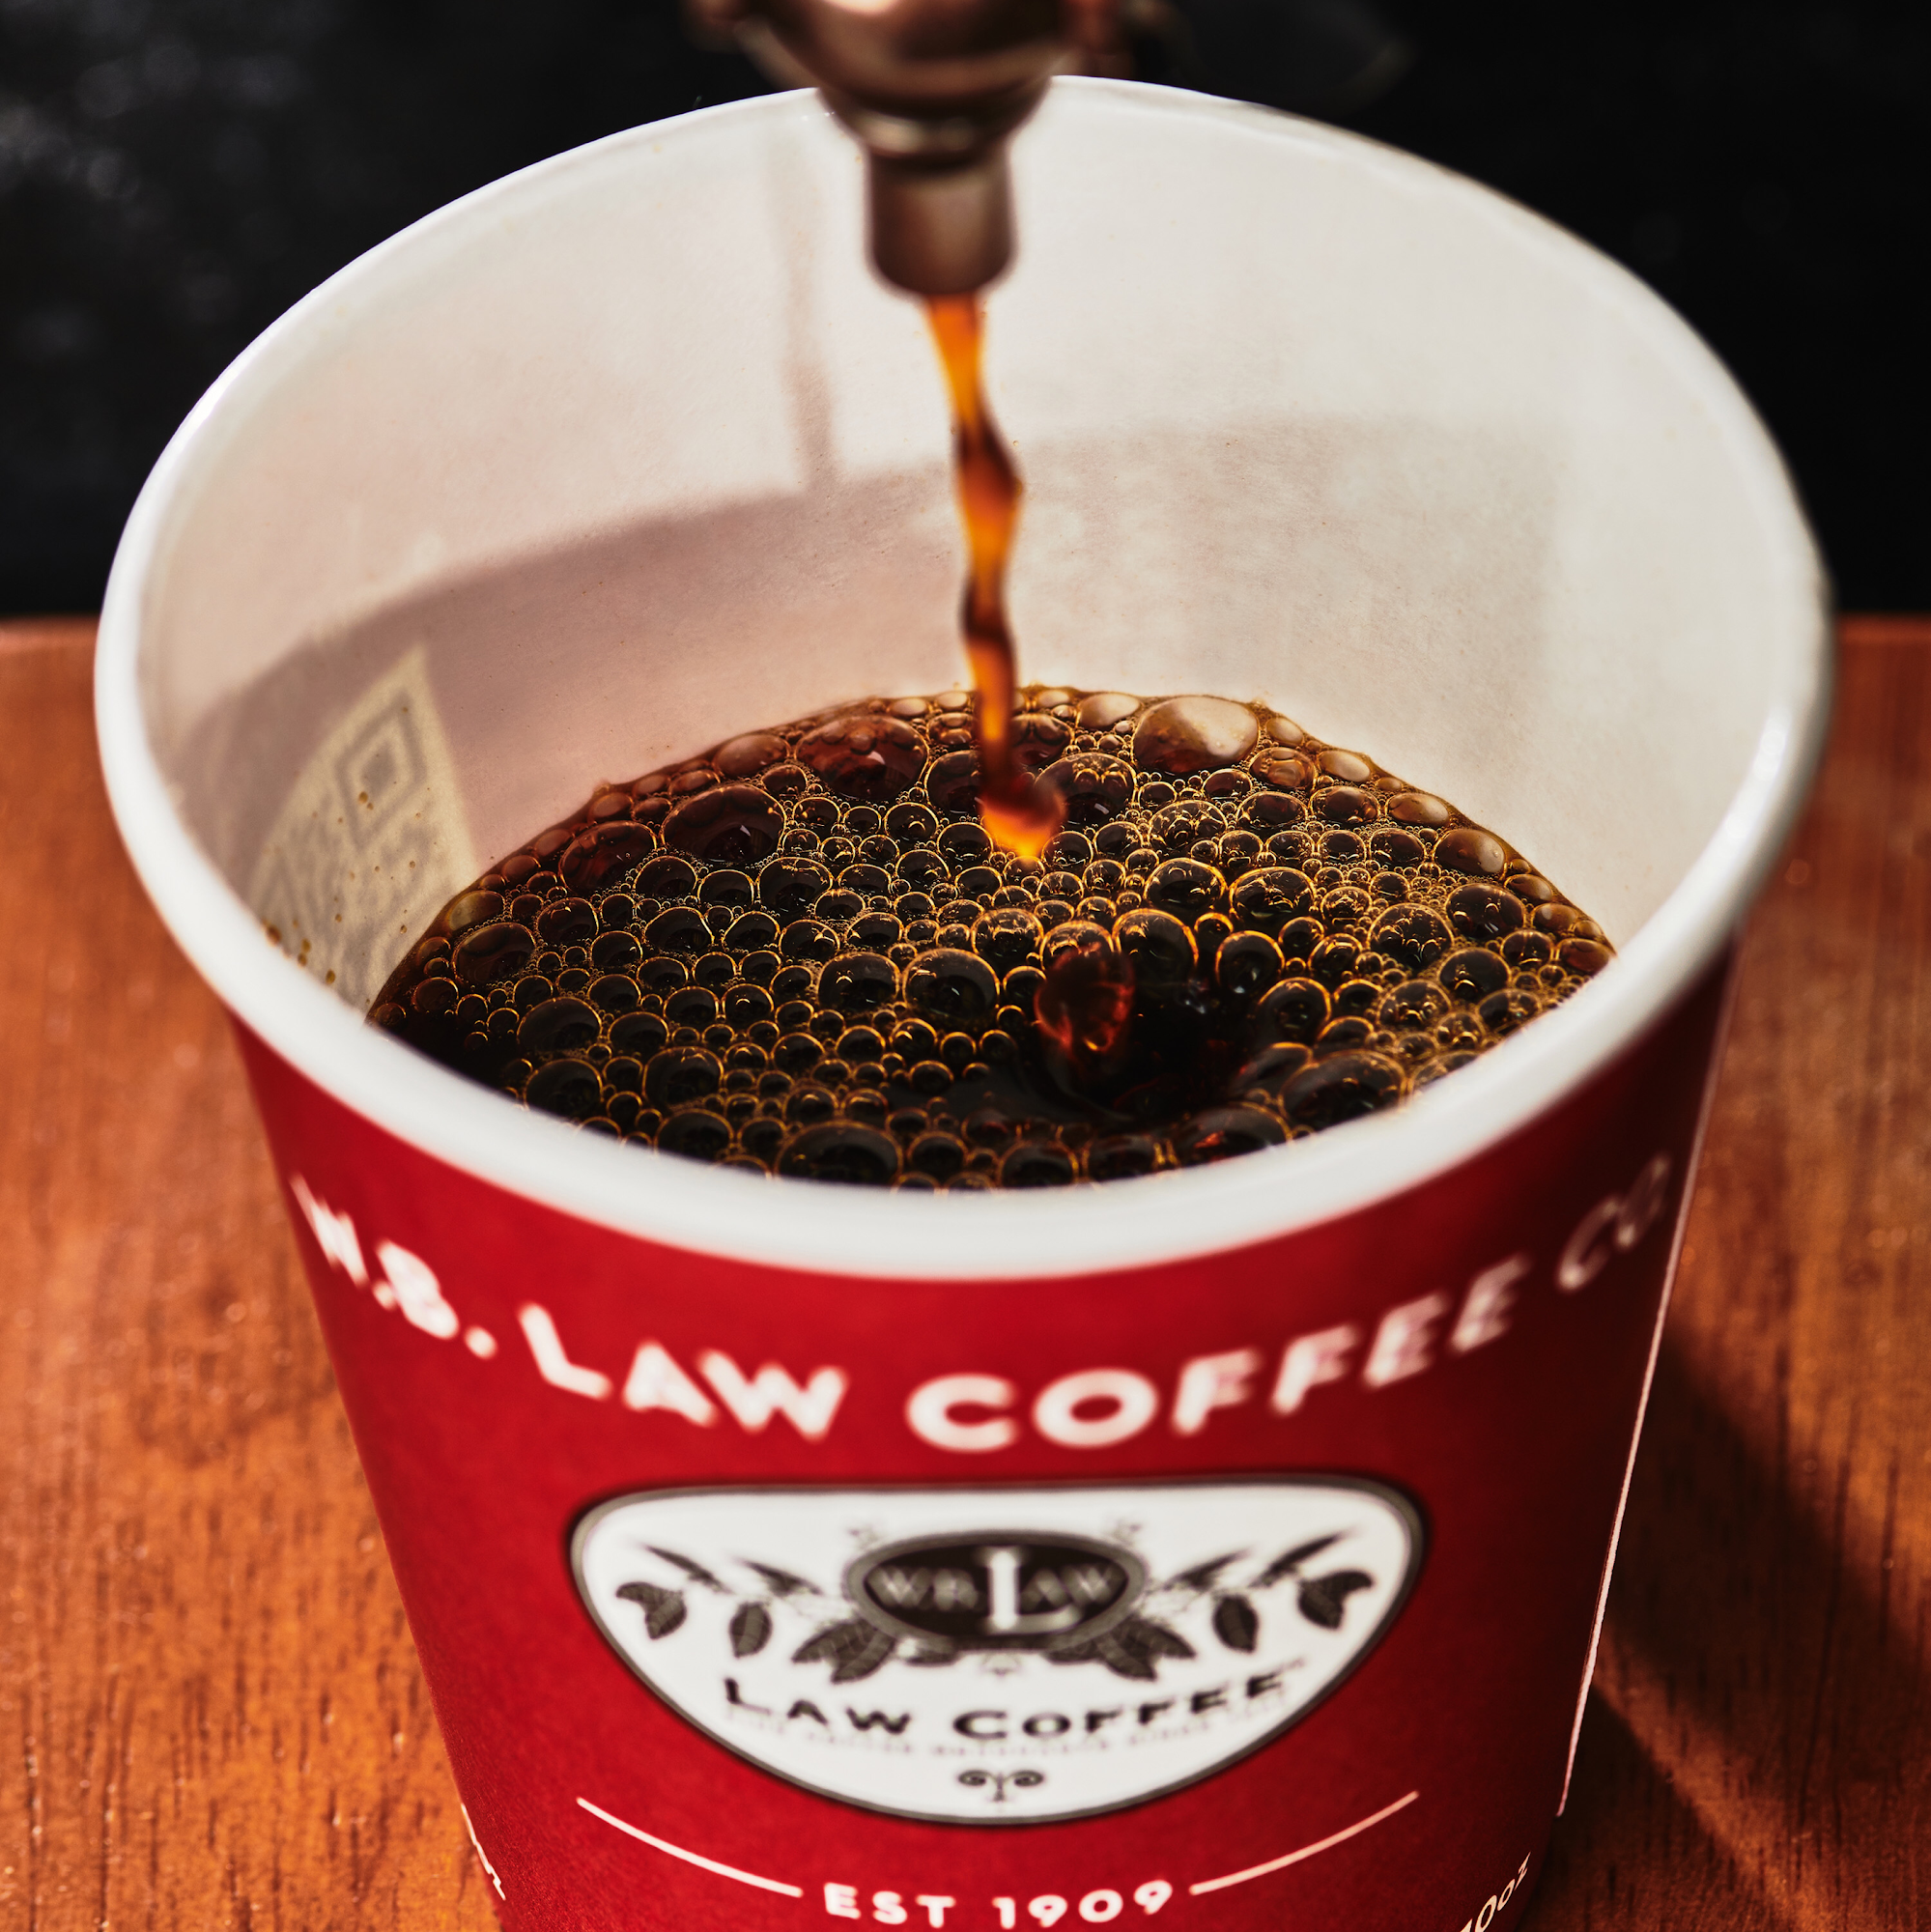 WB Law Coffee